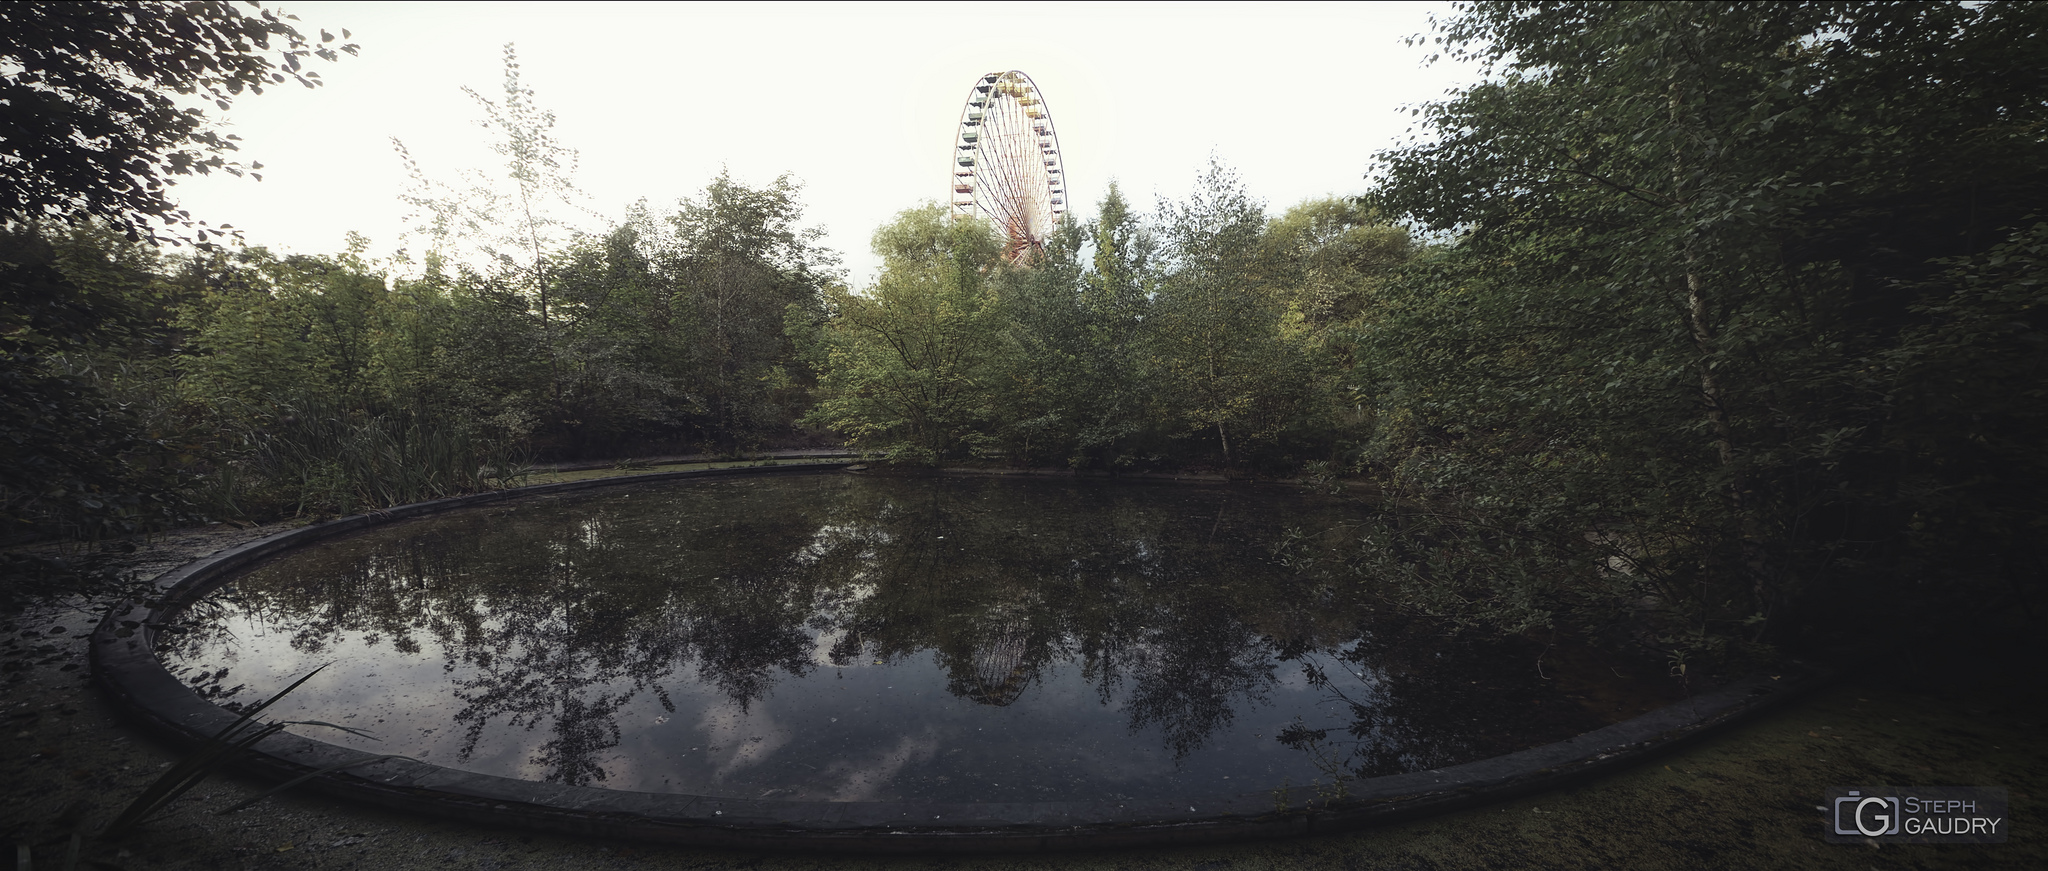 La grande roue de Spree Park [Click to start slideshow]